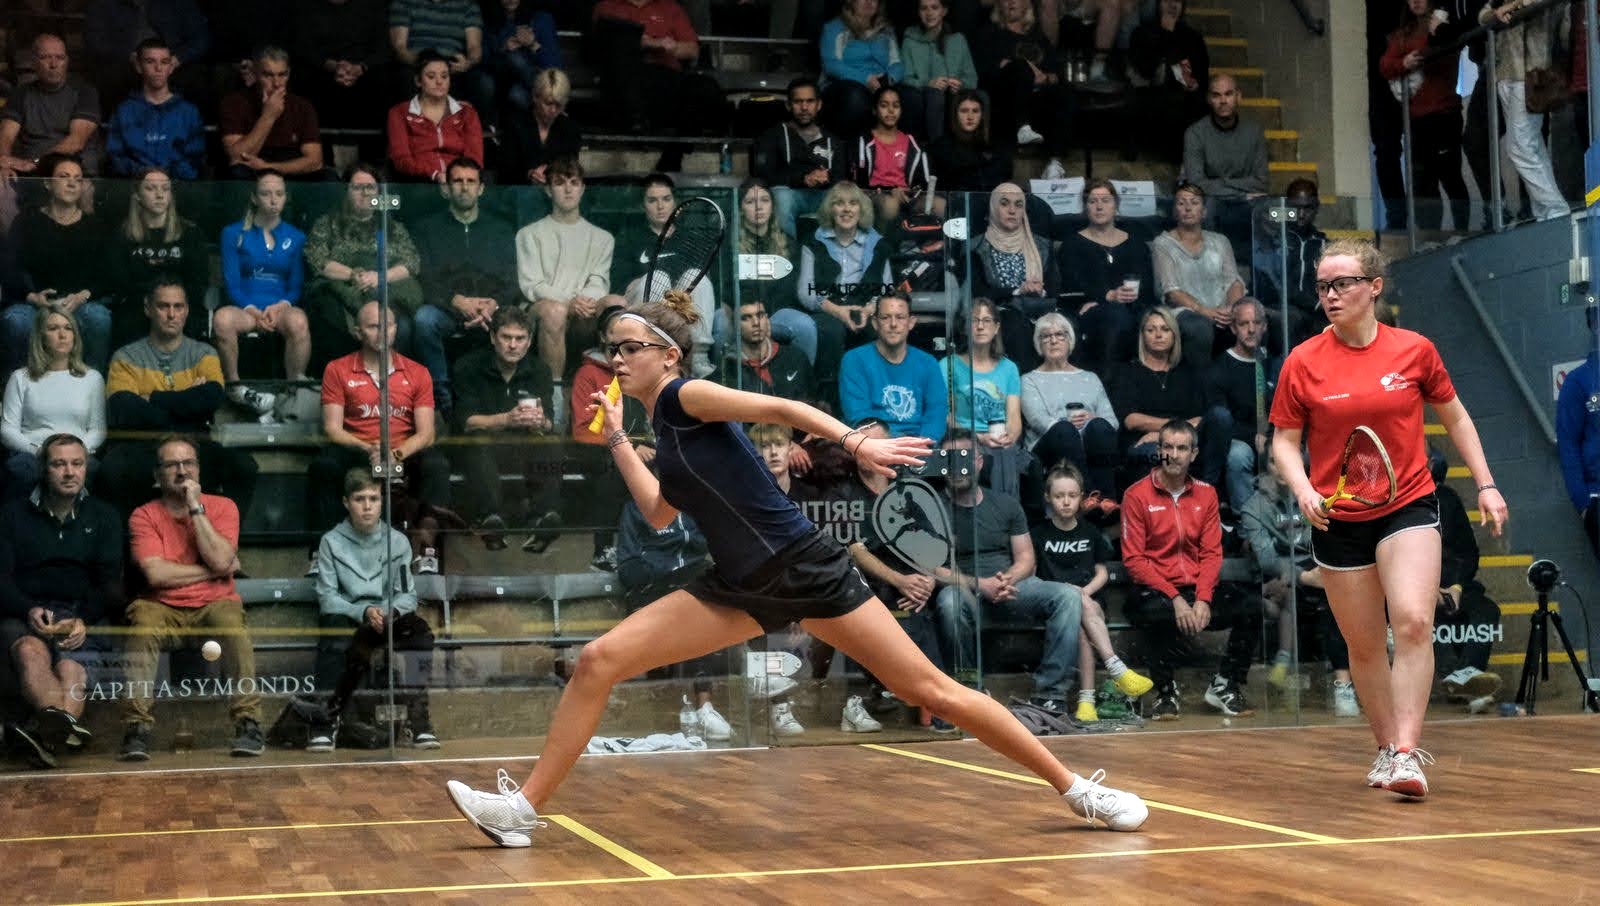 Amelia Haworth vs Ellie Breach playing in the 2022 British Junior Open